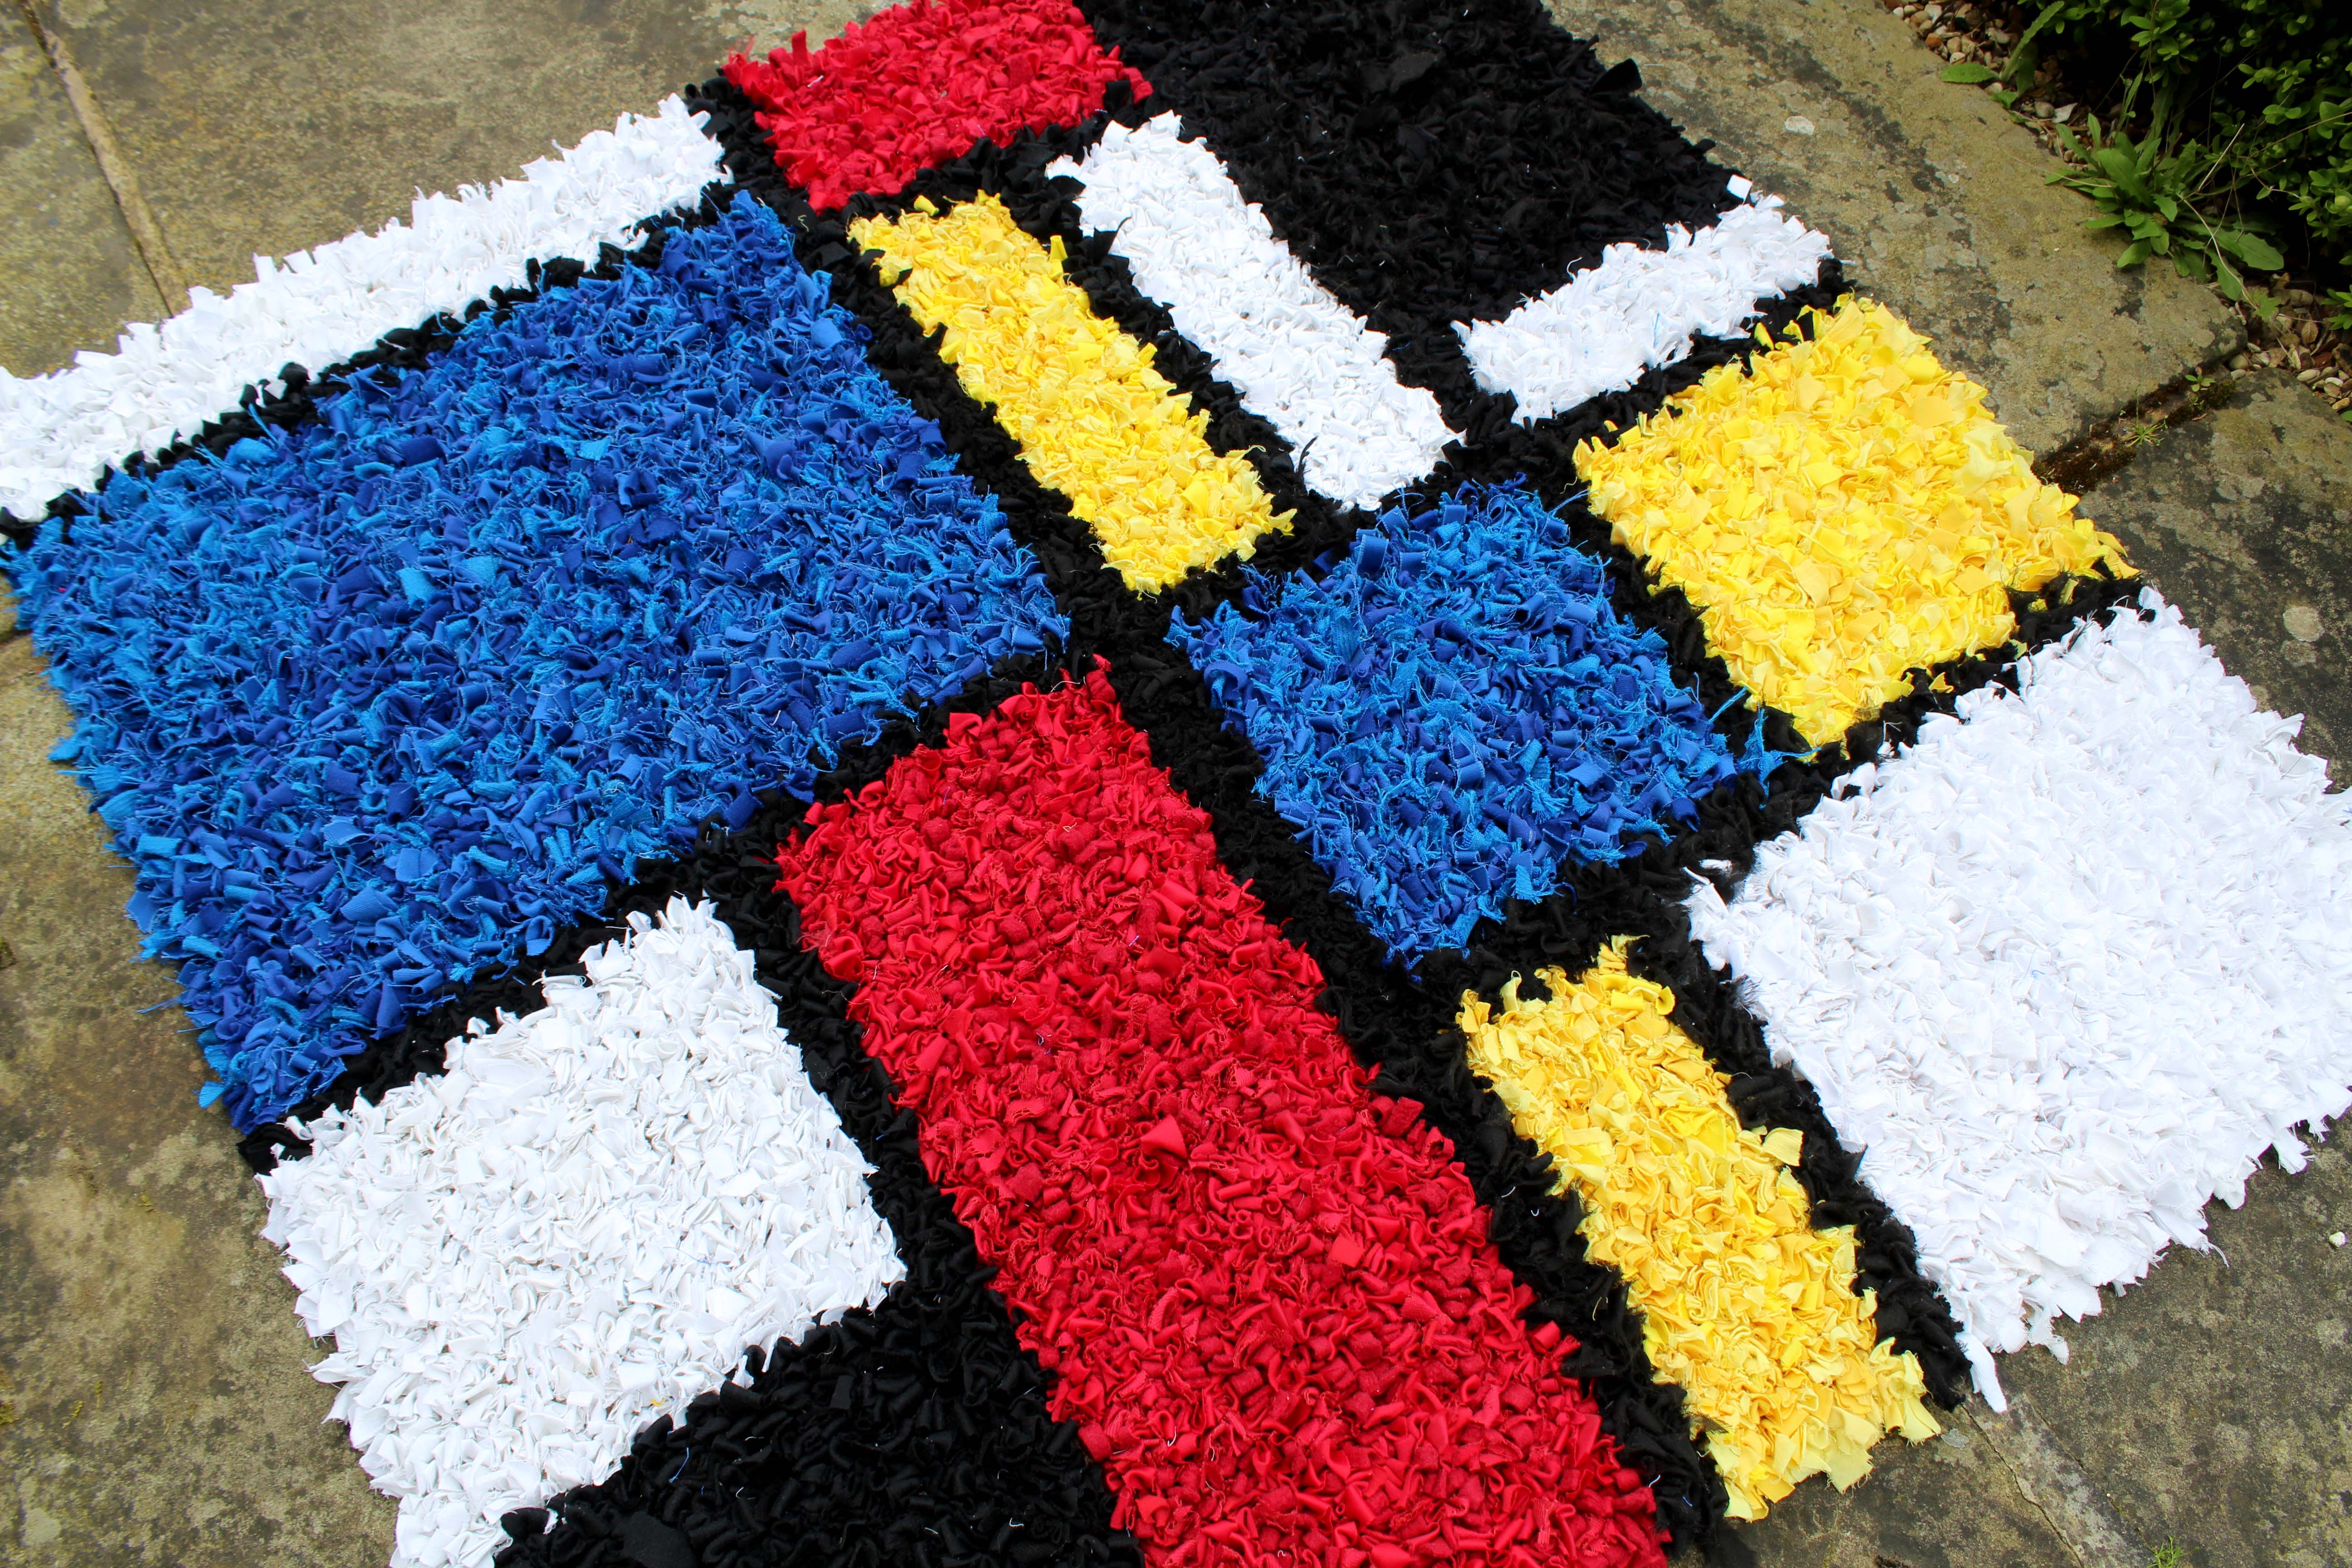 Mondrian artwork rug made using upcycled materials. 